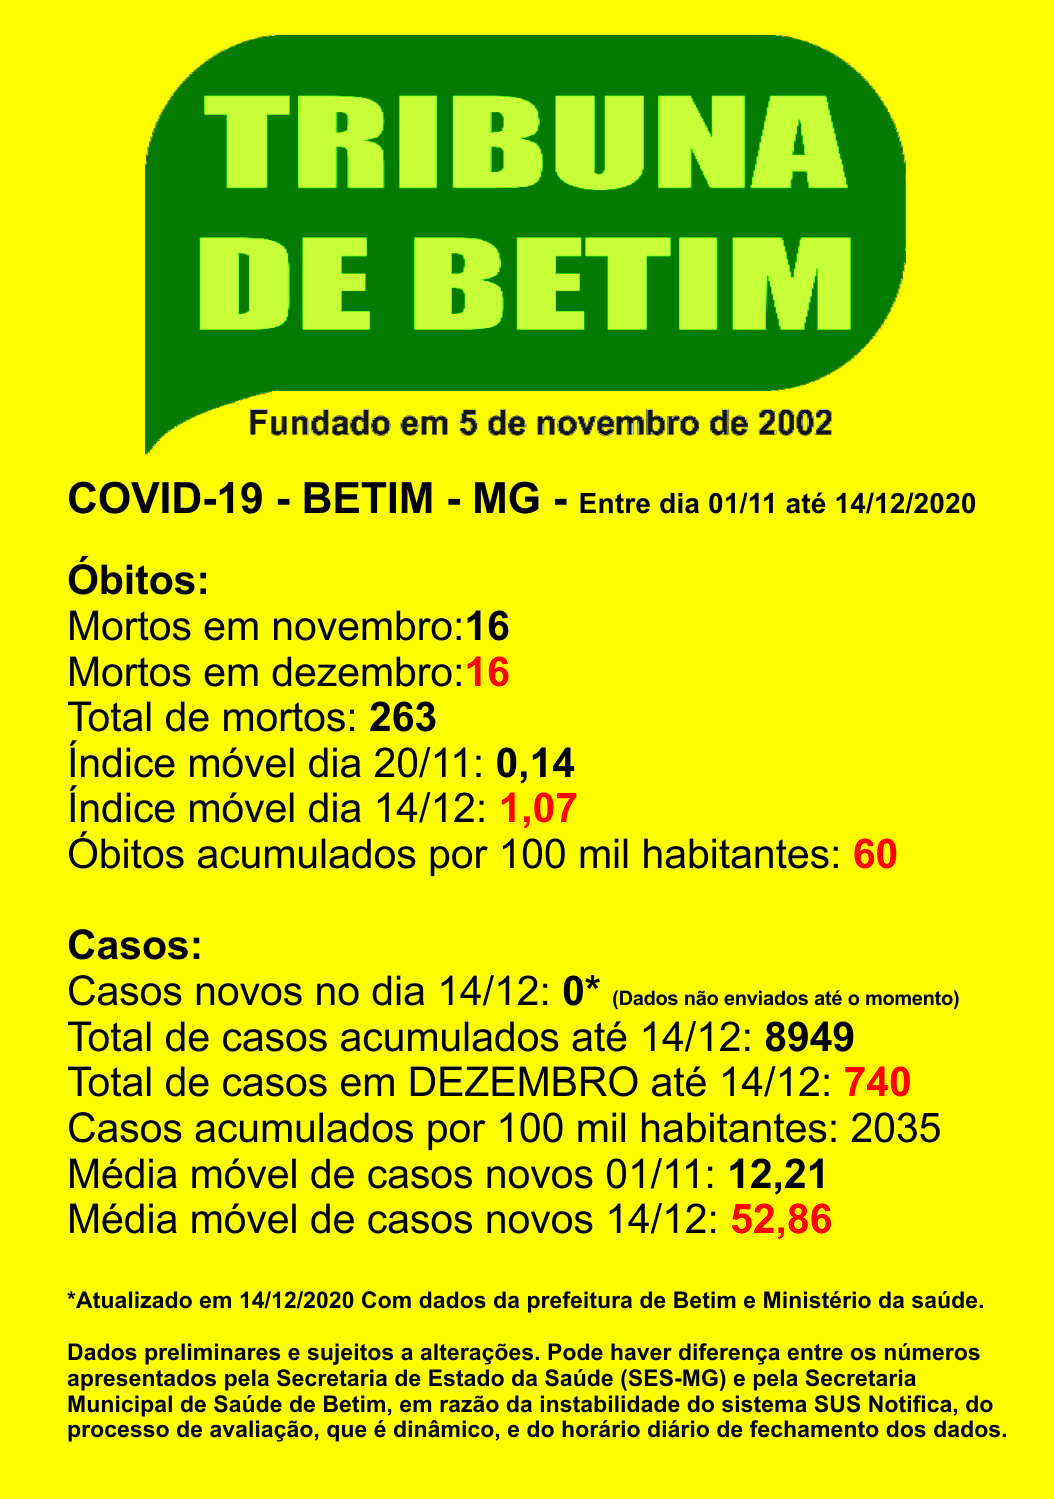 covid_betim_boletim_tribuna-14-12-2020jpg.jpg